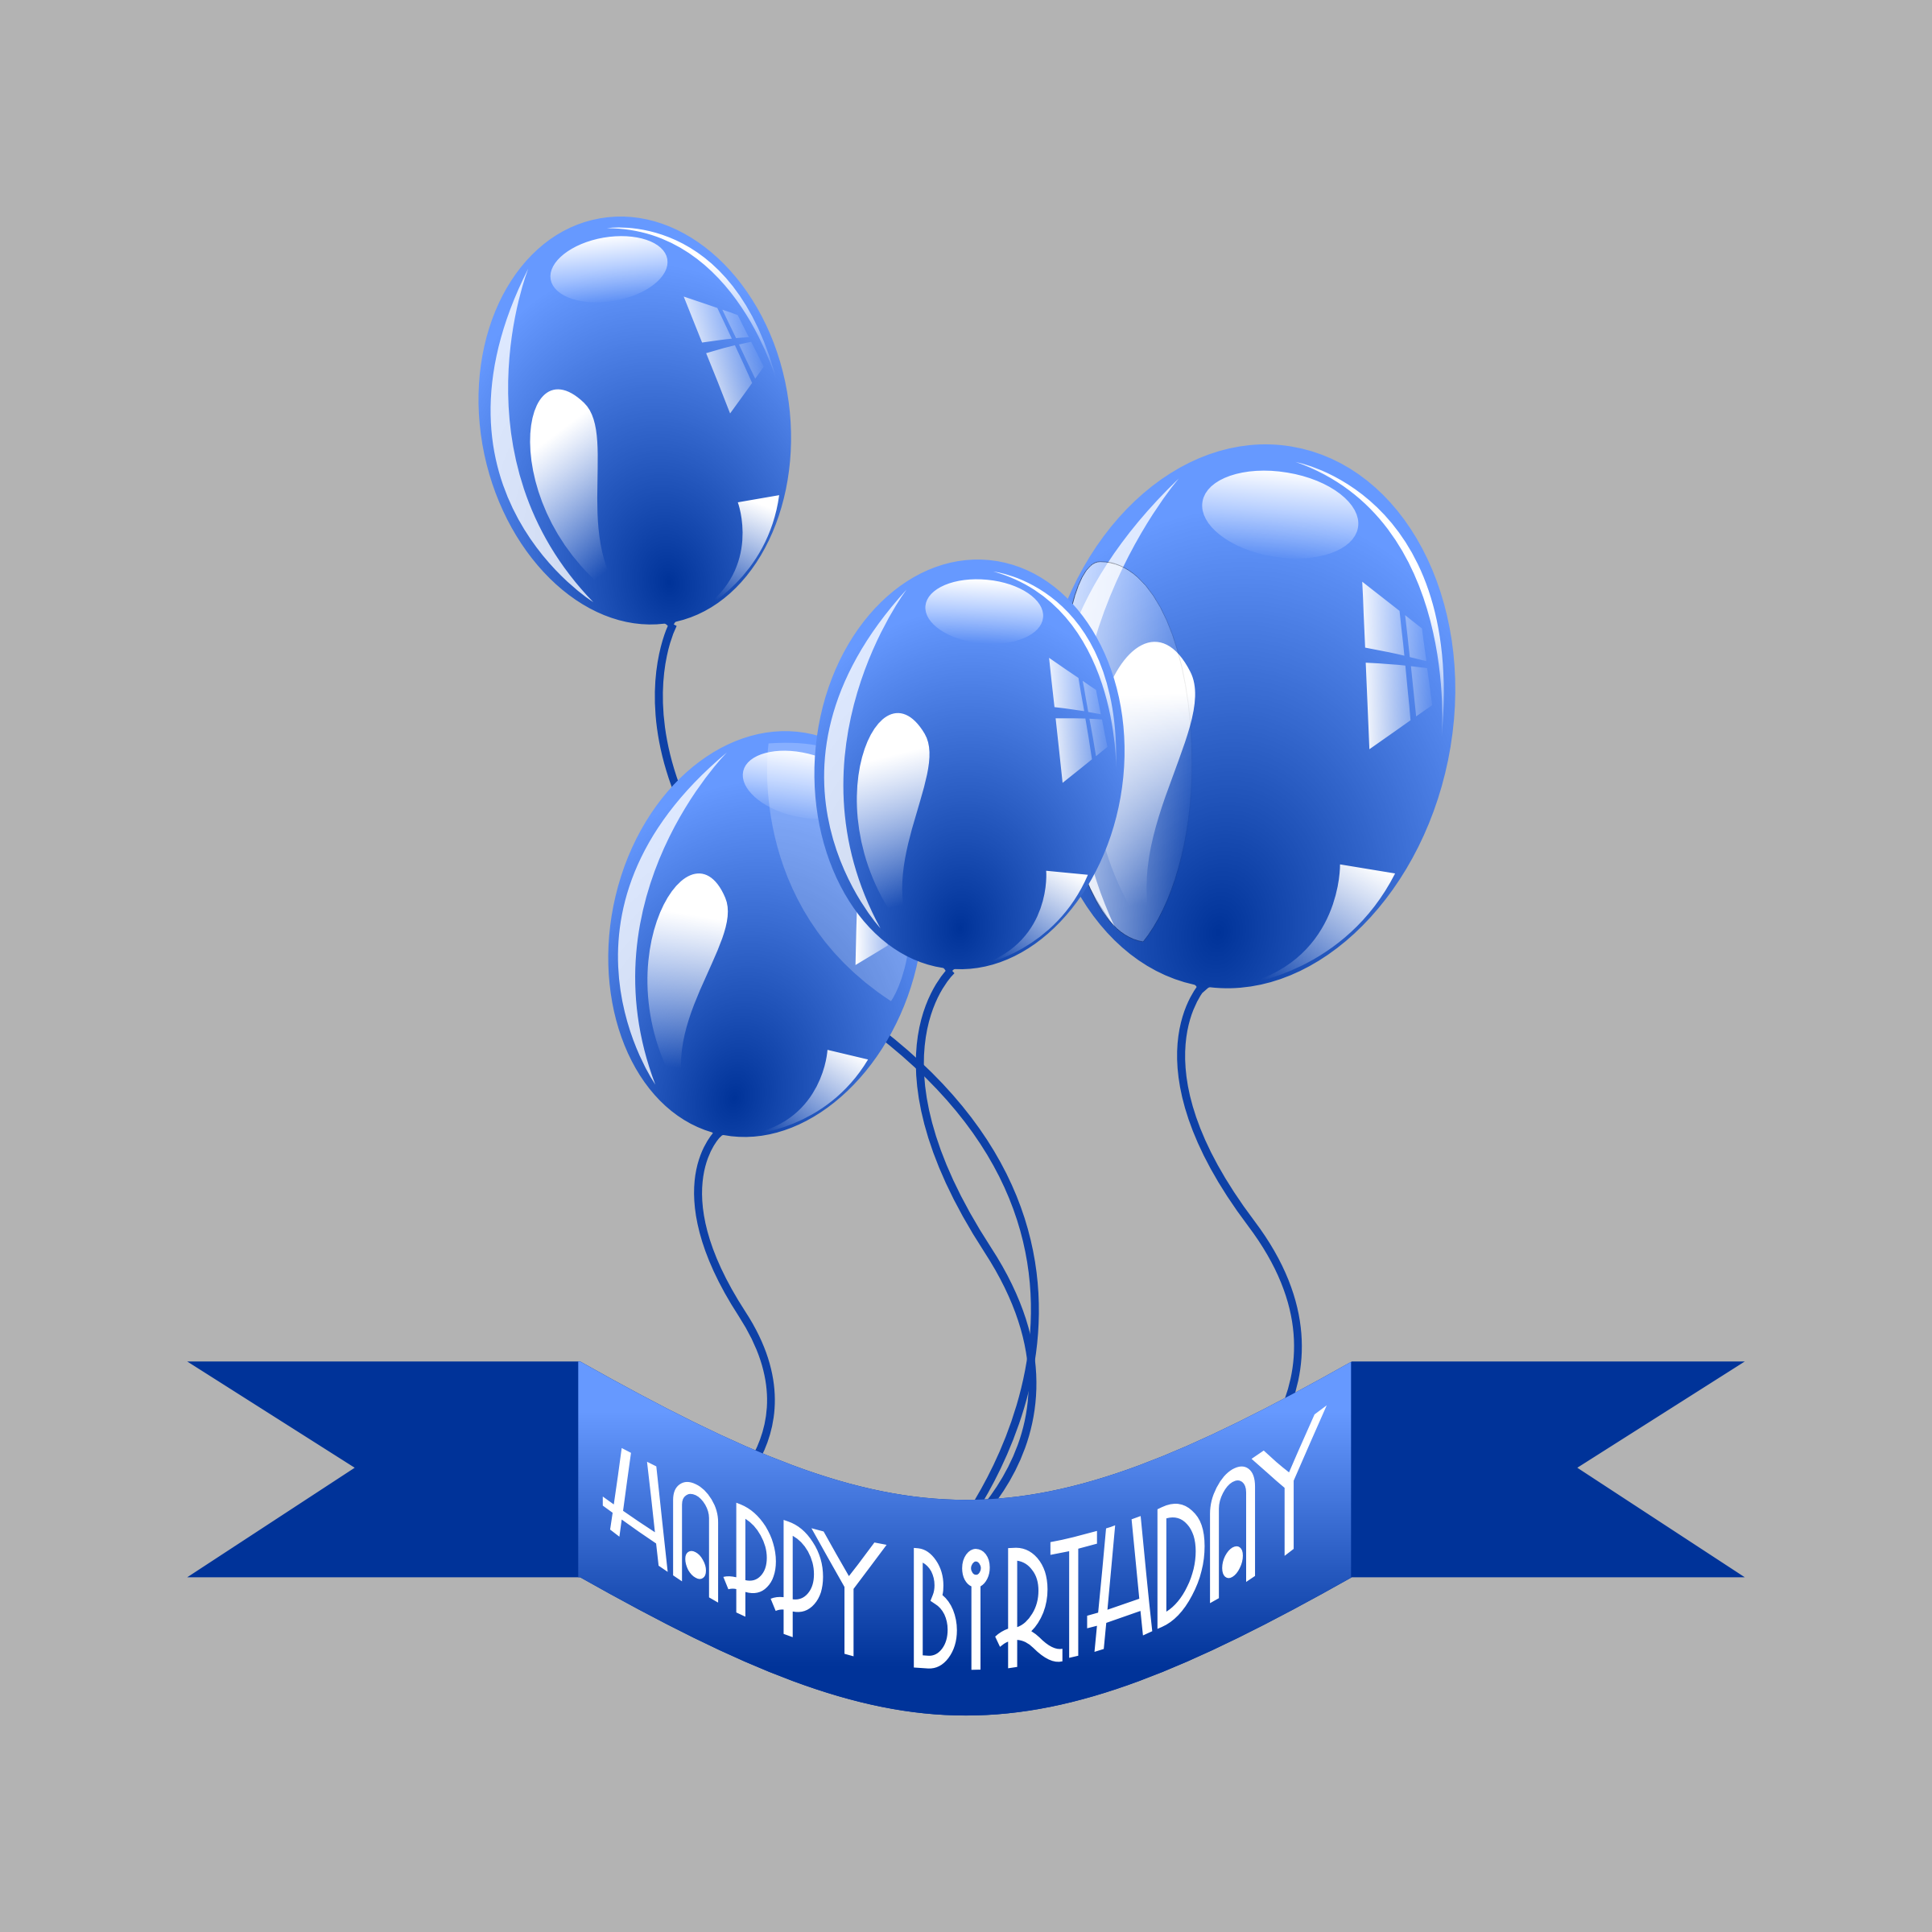 Birthday Celebration With Balloons Clip arts